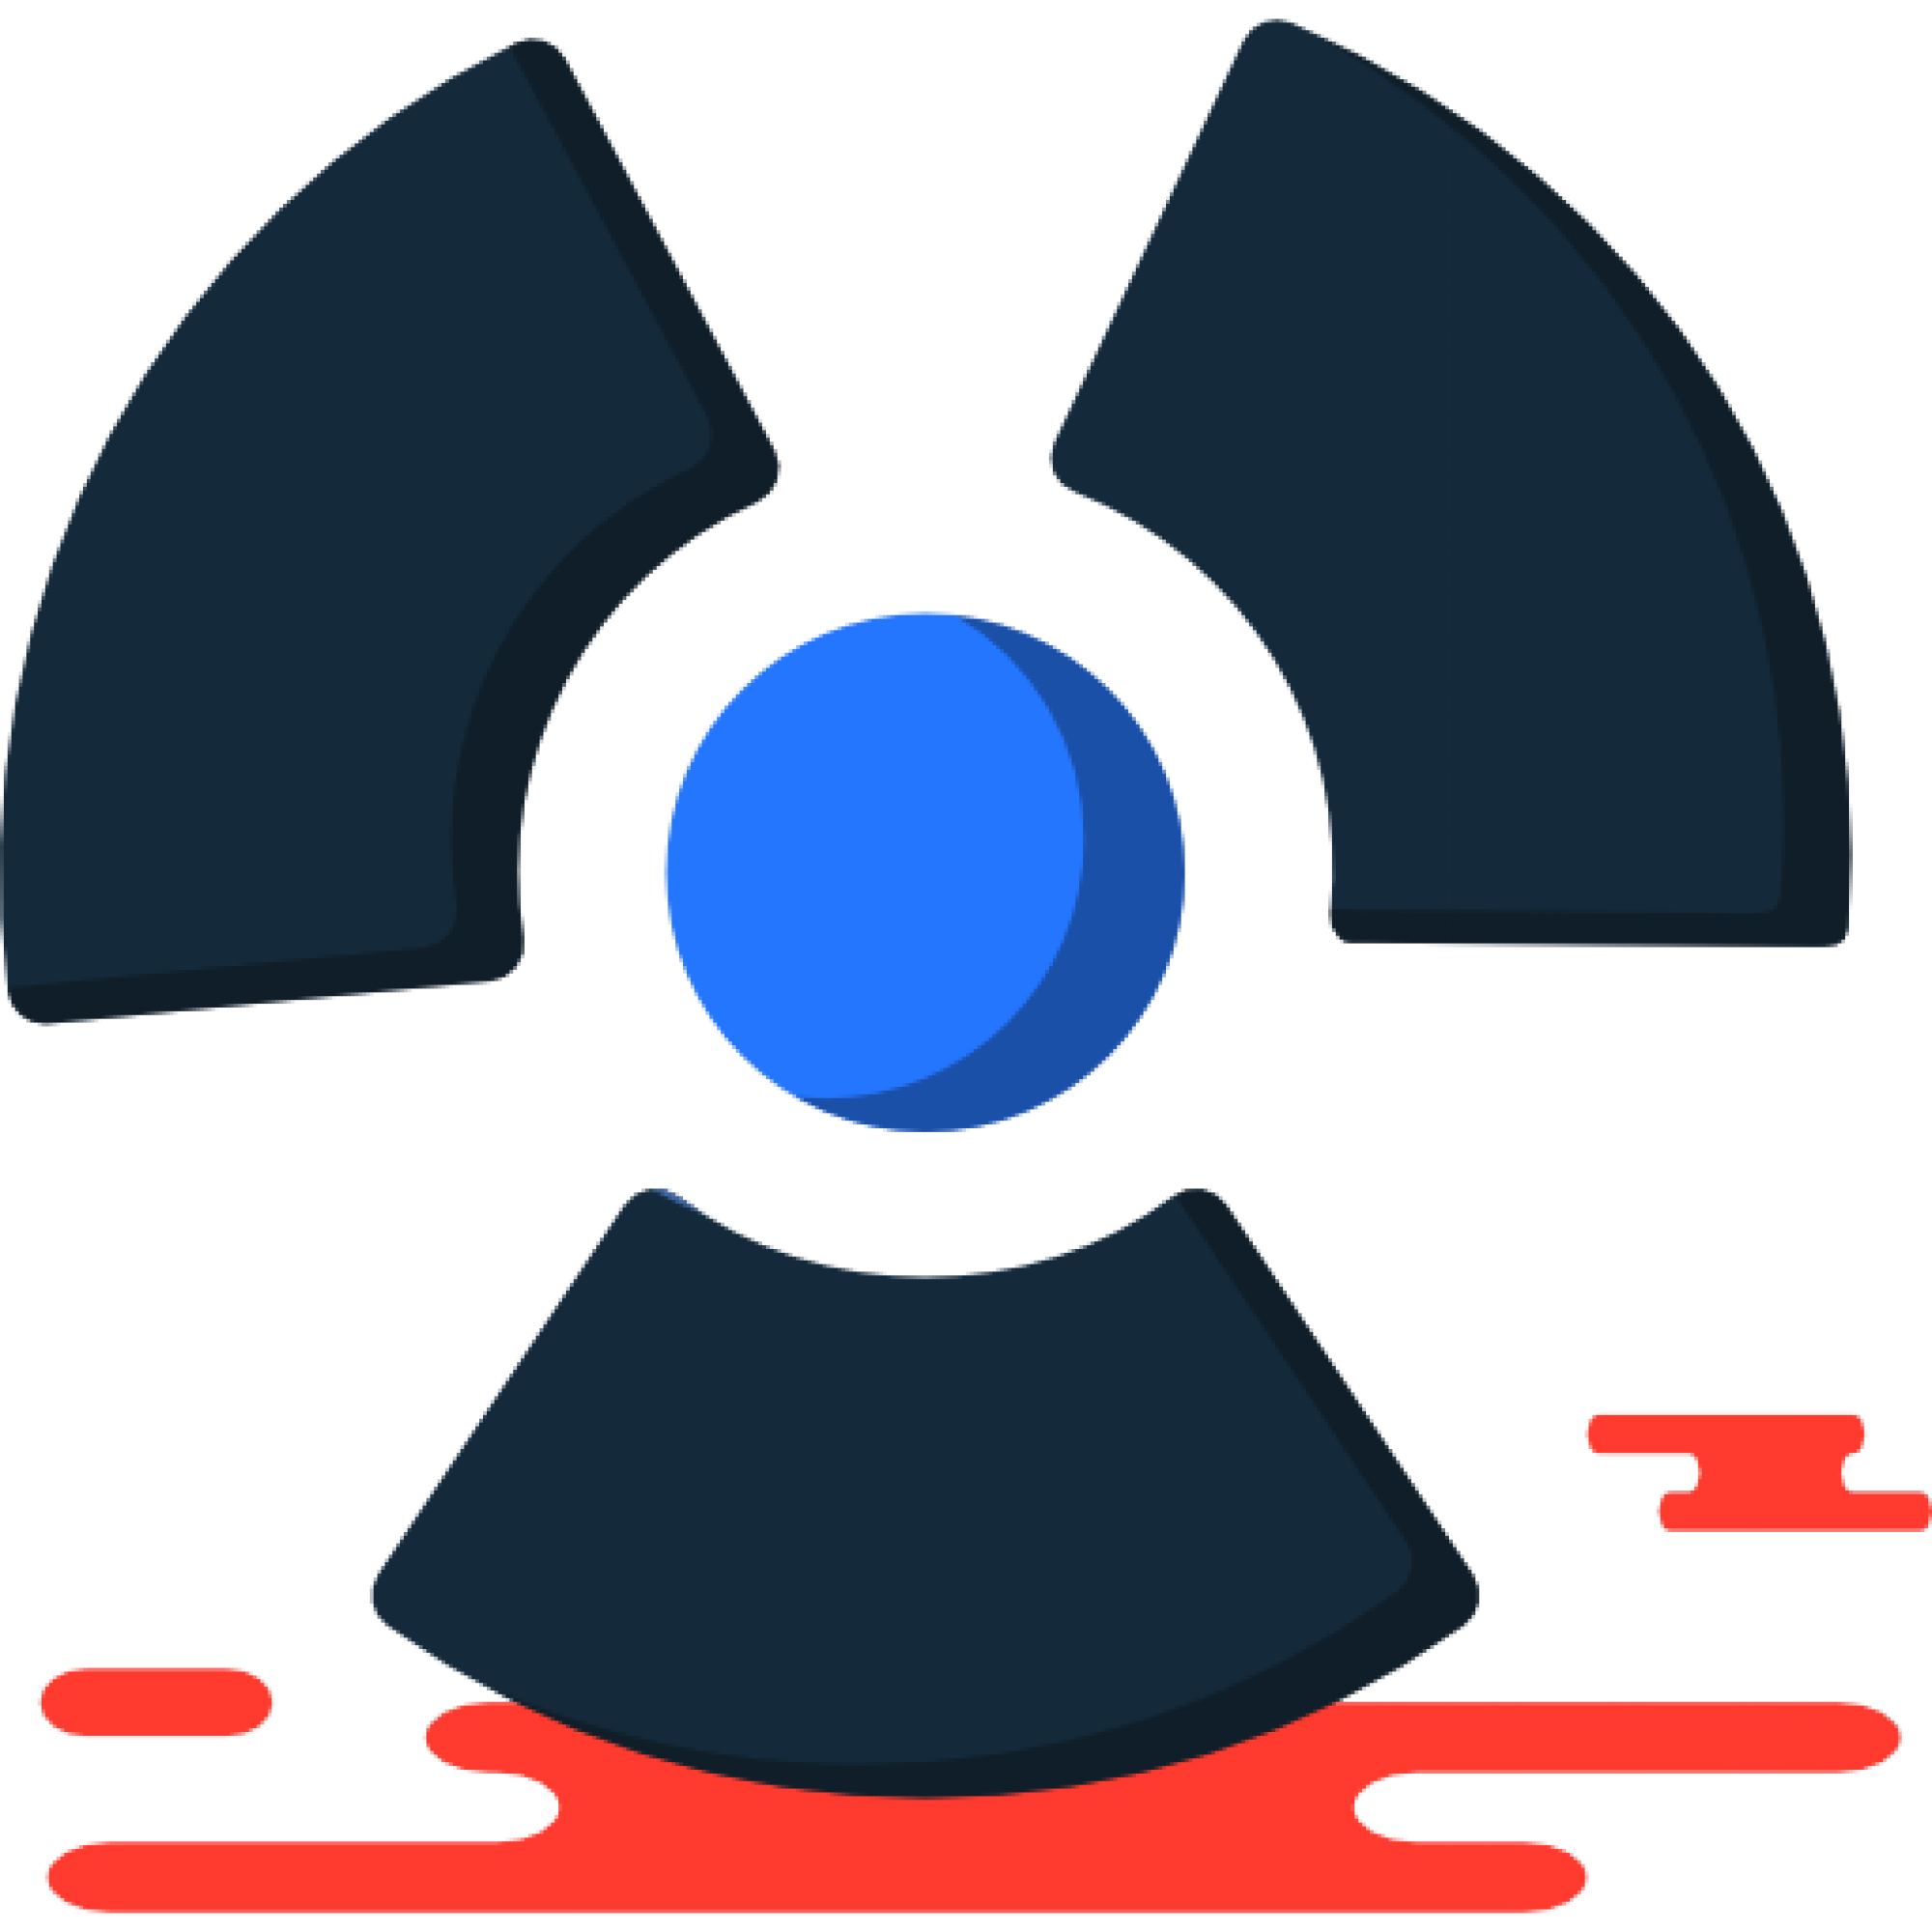 radiation_icon-icons.com_60612